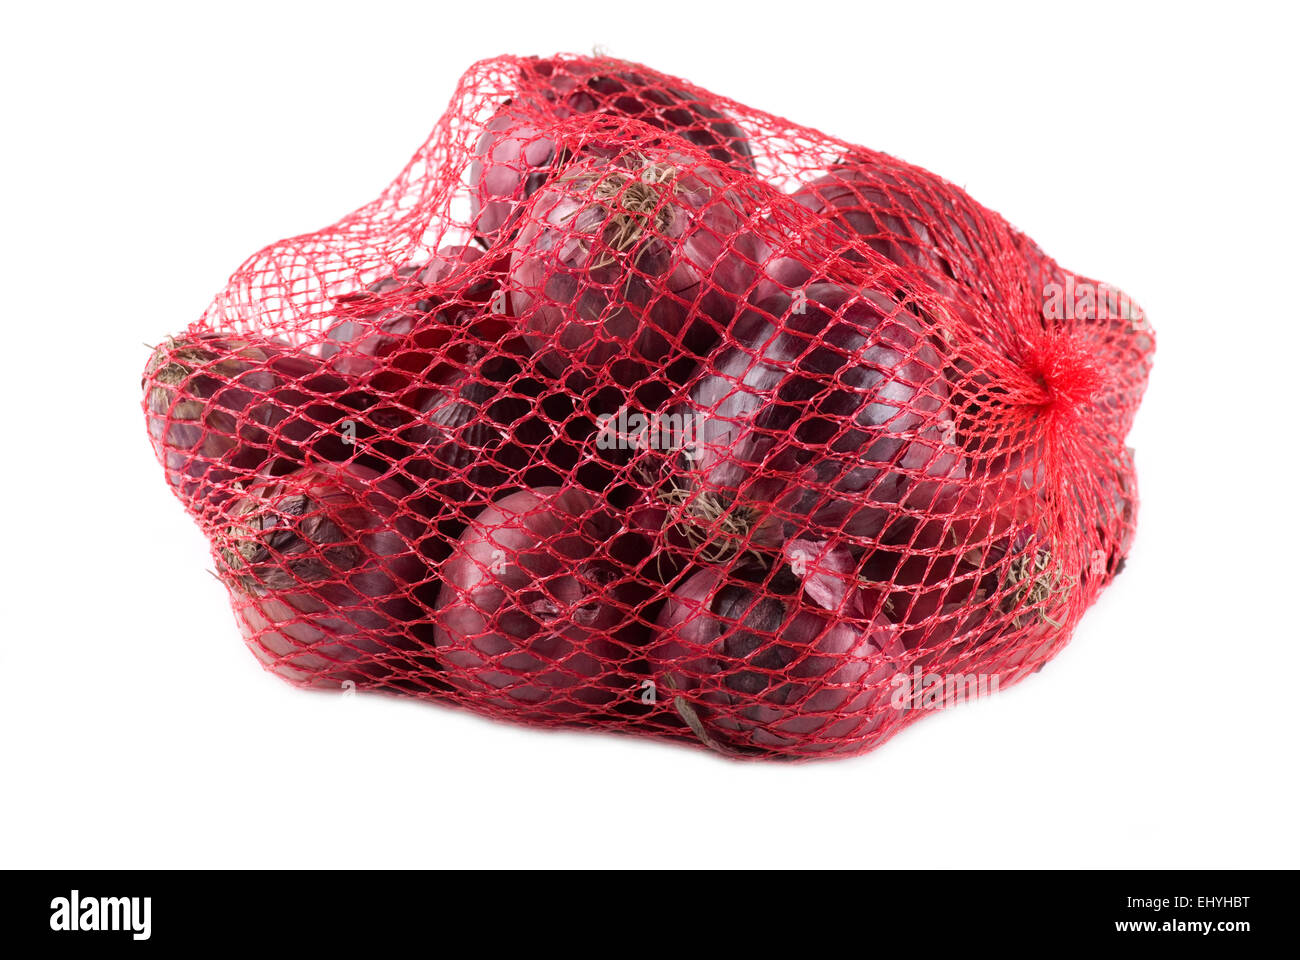 https://c8.alamy.com/comp/EHYHBT/red-onions-in-a-net-bag-EHYHBT.jpg